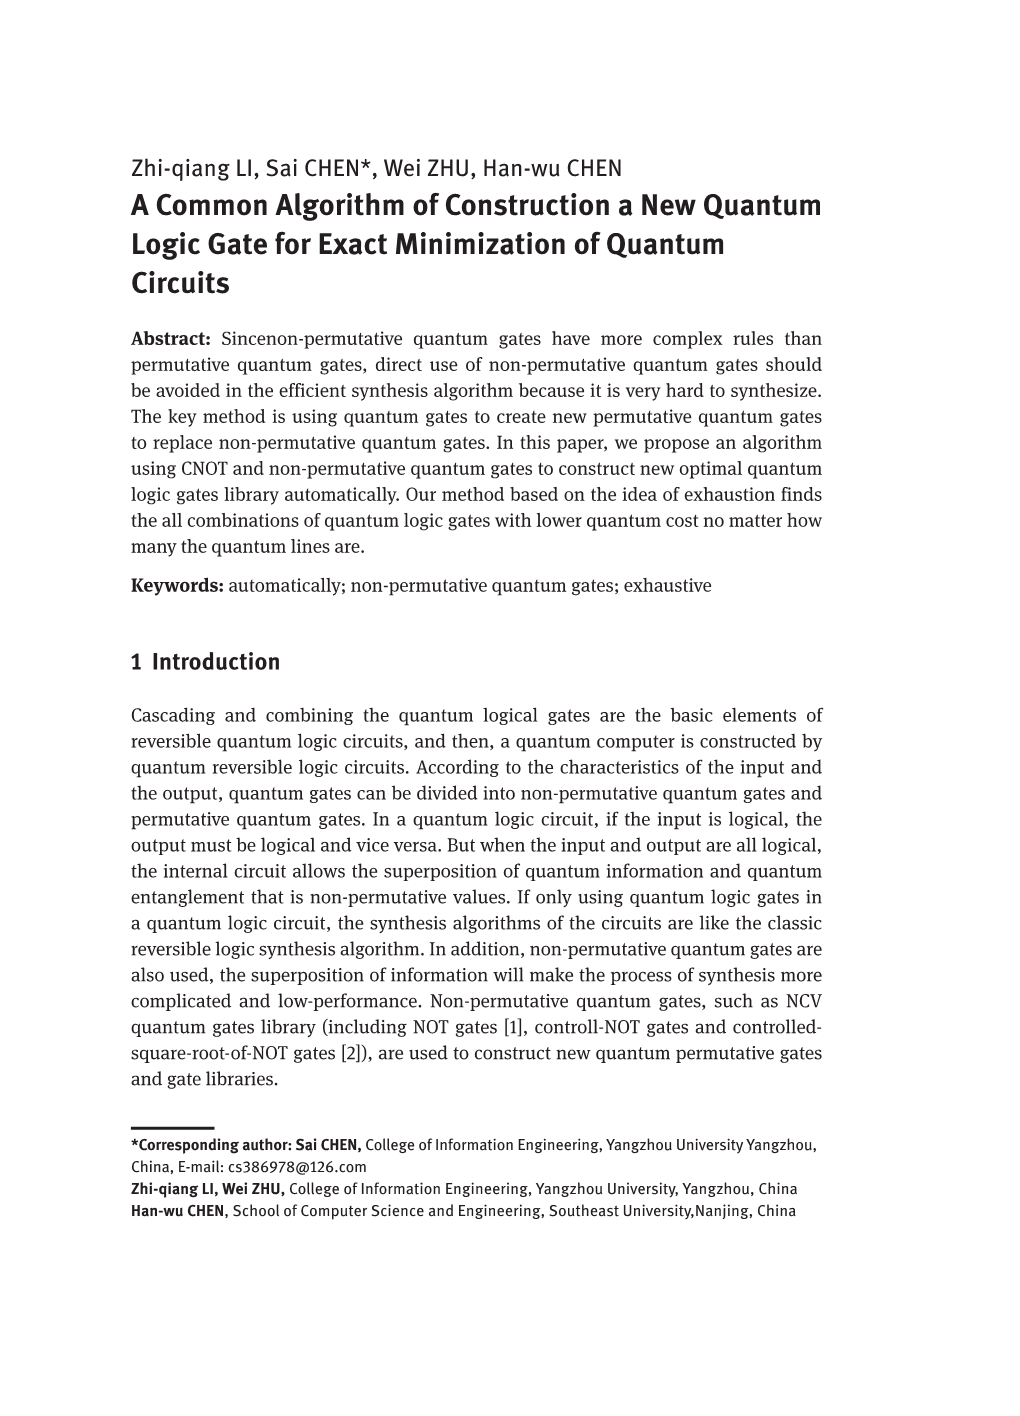 A Common Algorithm of Construction a New Quantum Logic Gate for Exact Minimization of Quantum Circuits